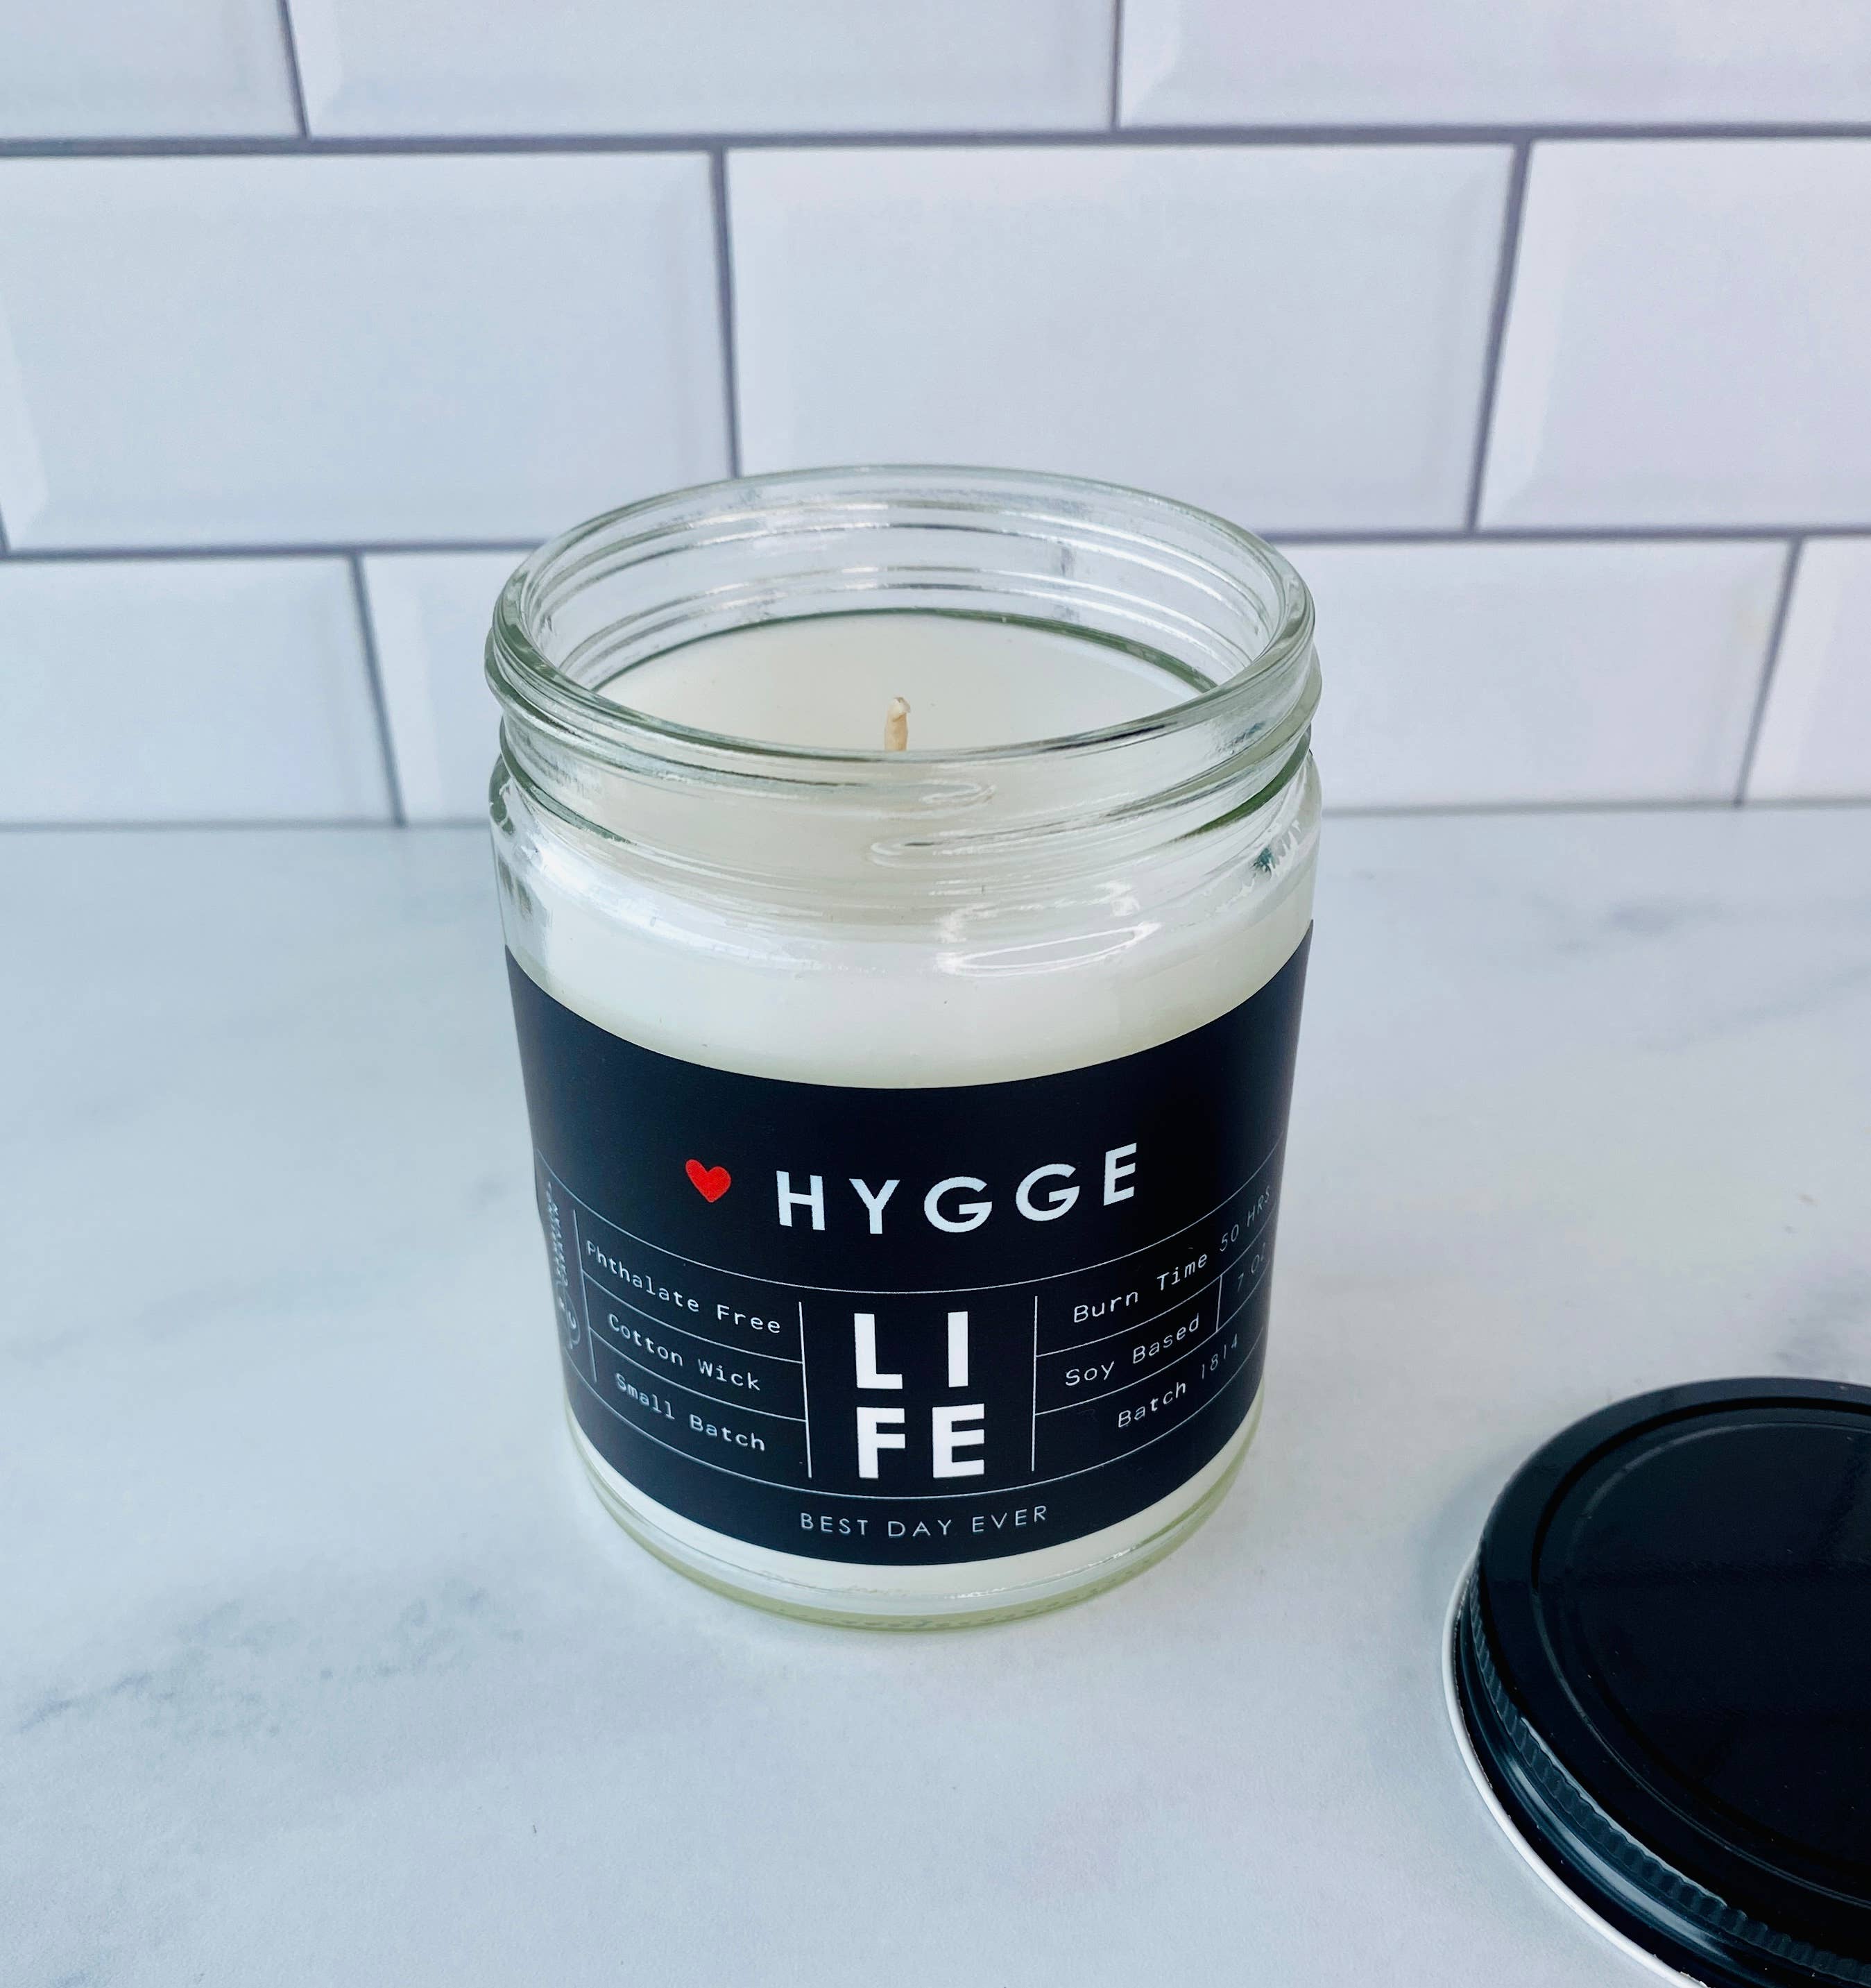 Candle: Hygge (Danish for comfort) Black Label / Amber Jar/ Sea Salt & Orchid Scent